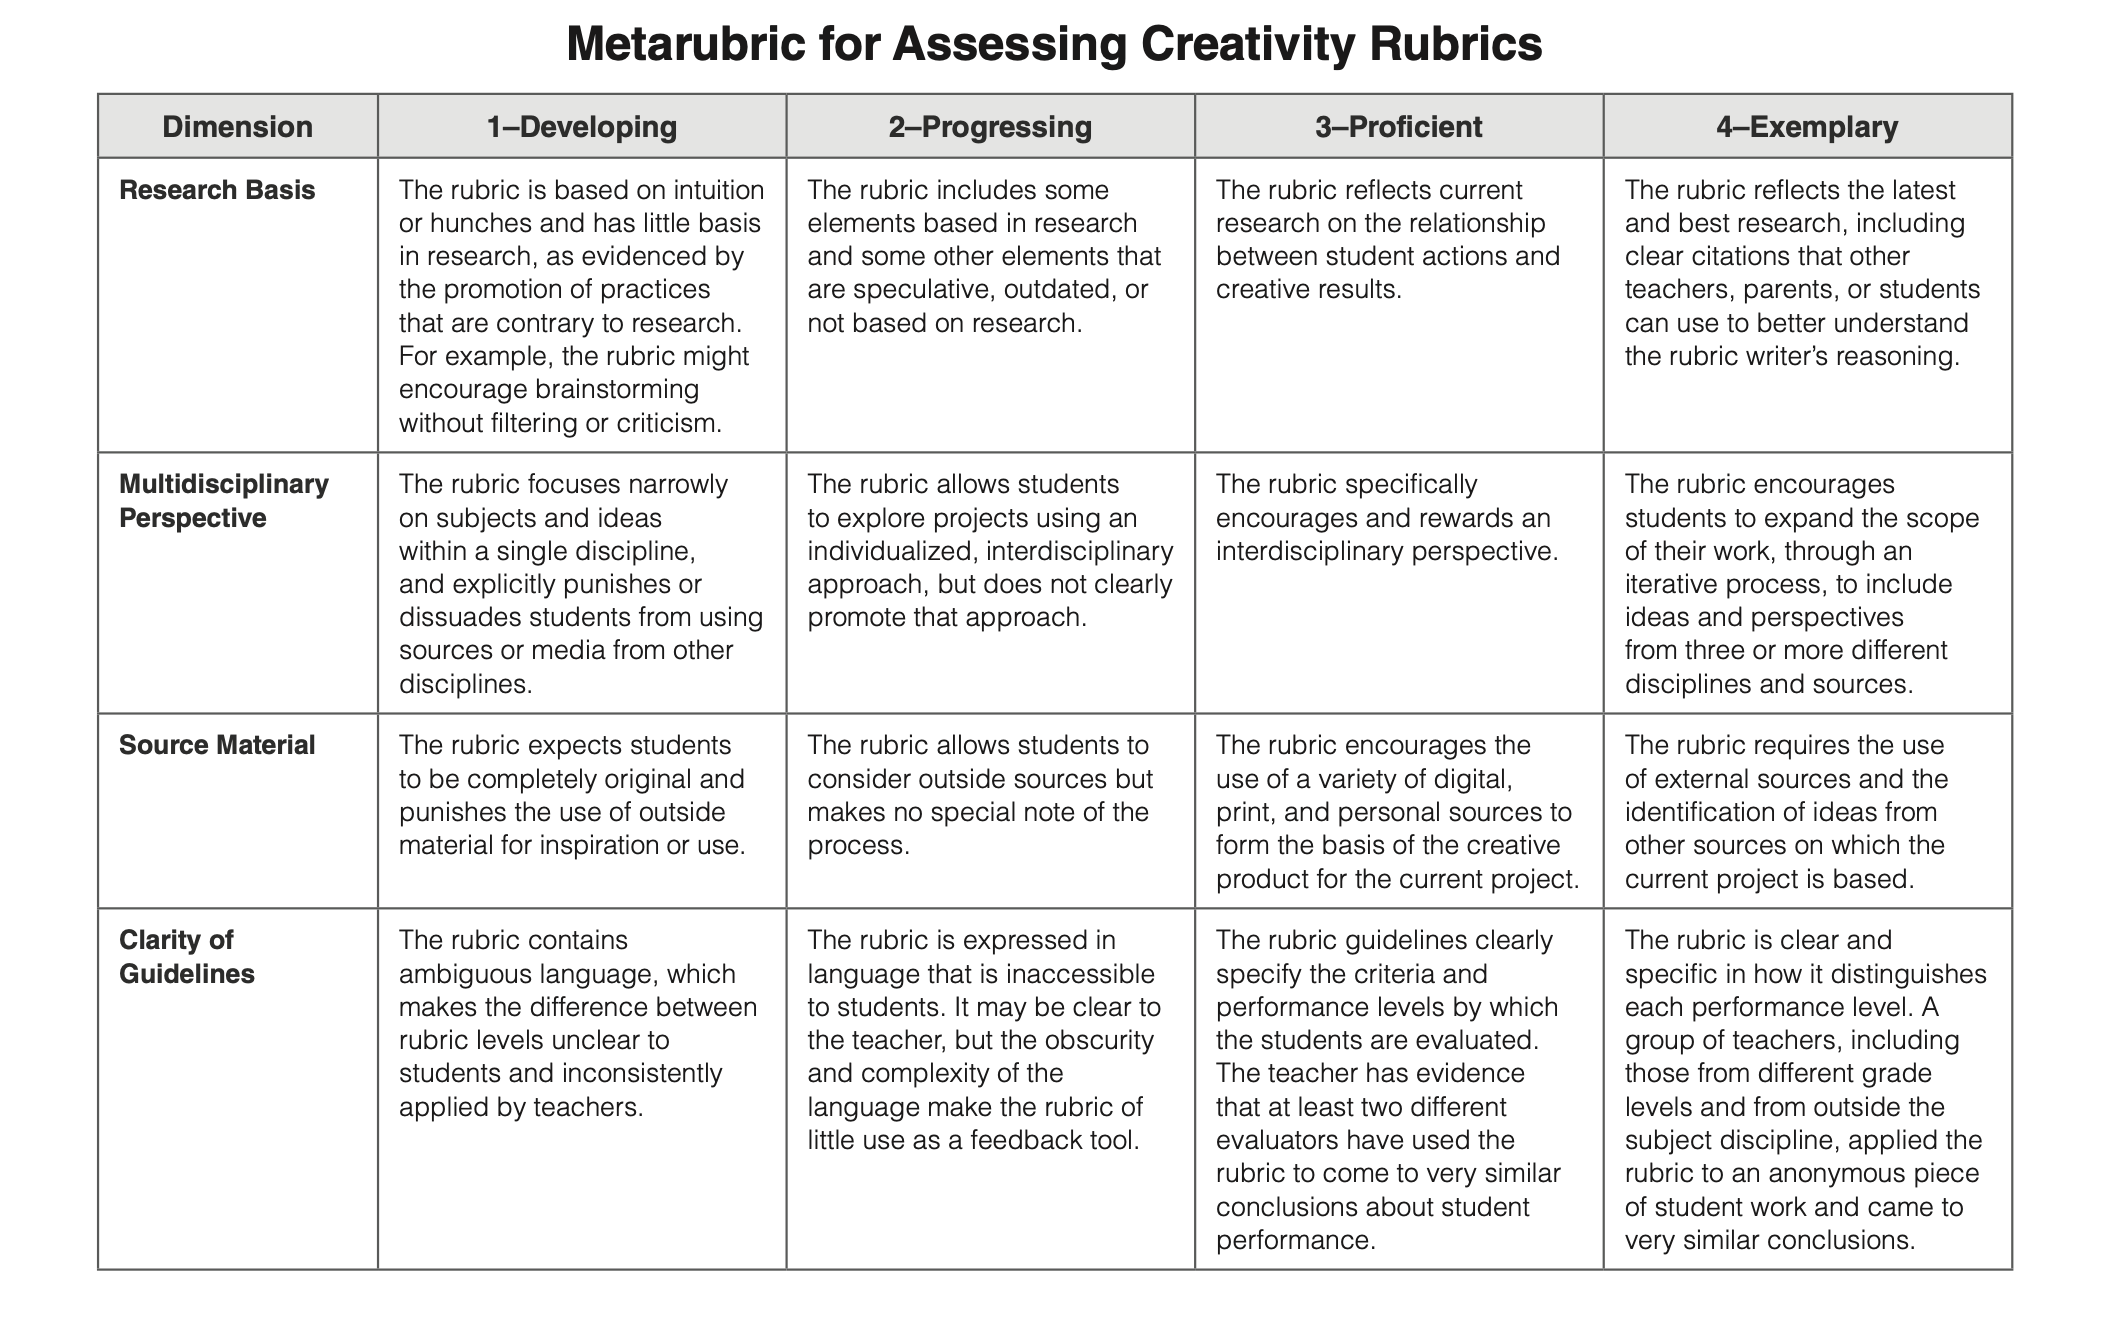 metarubric-for-assessing-creativity-rubrics-creative-leadership-solutions